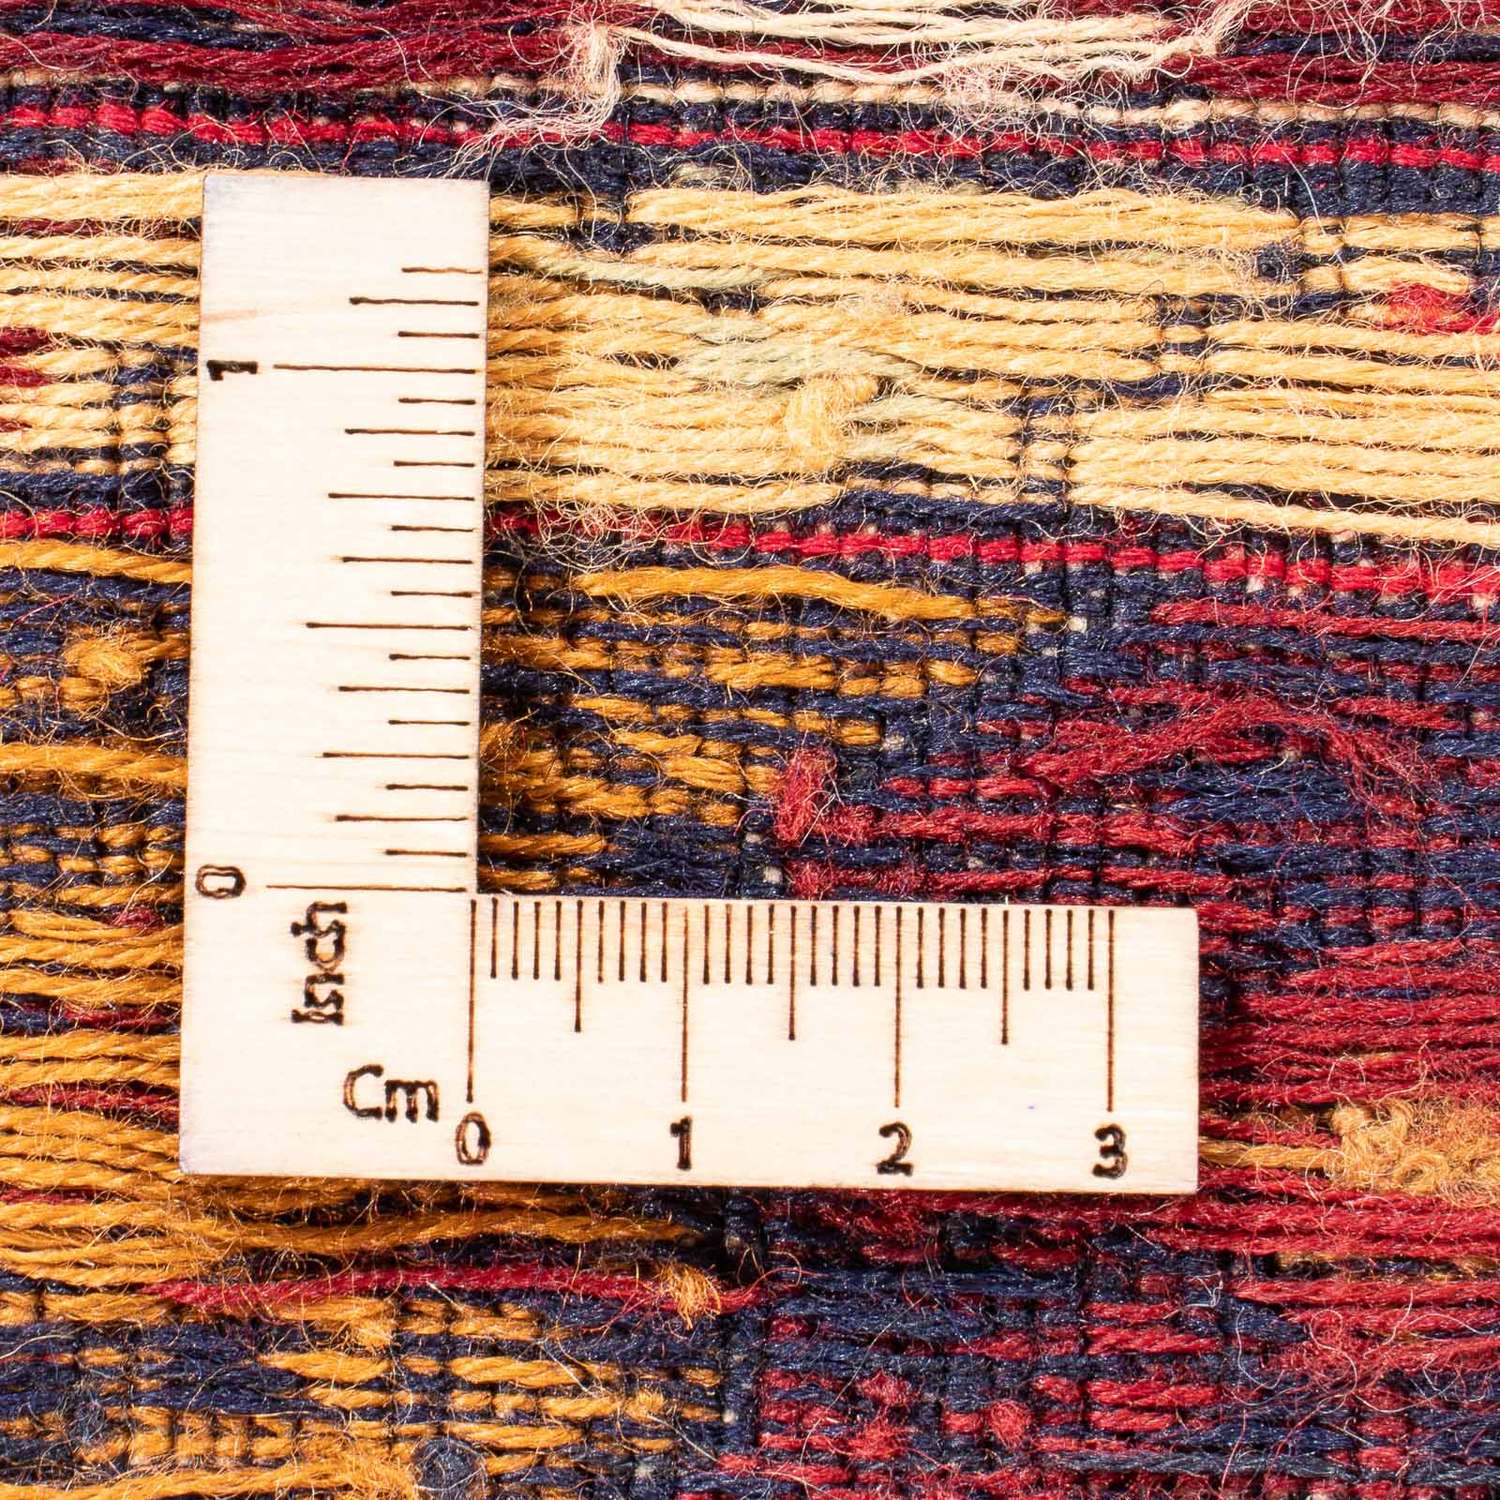 Kelim Carpet - orientalisk matta - 196 x 127 cm - flerfärgad